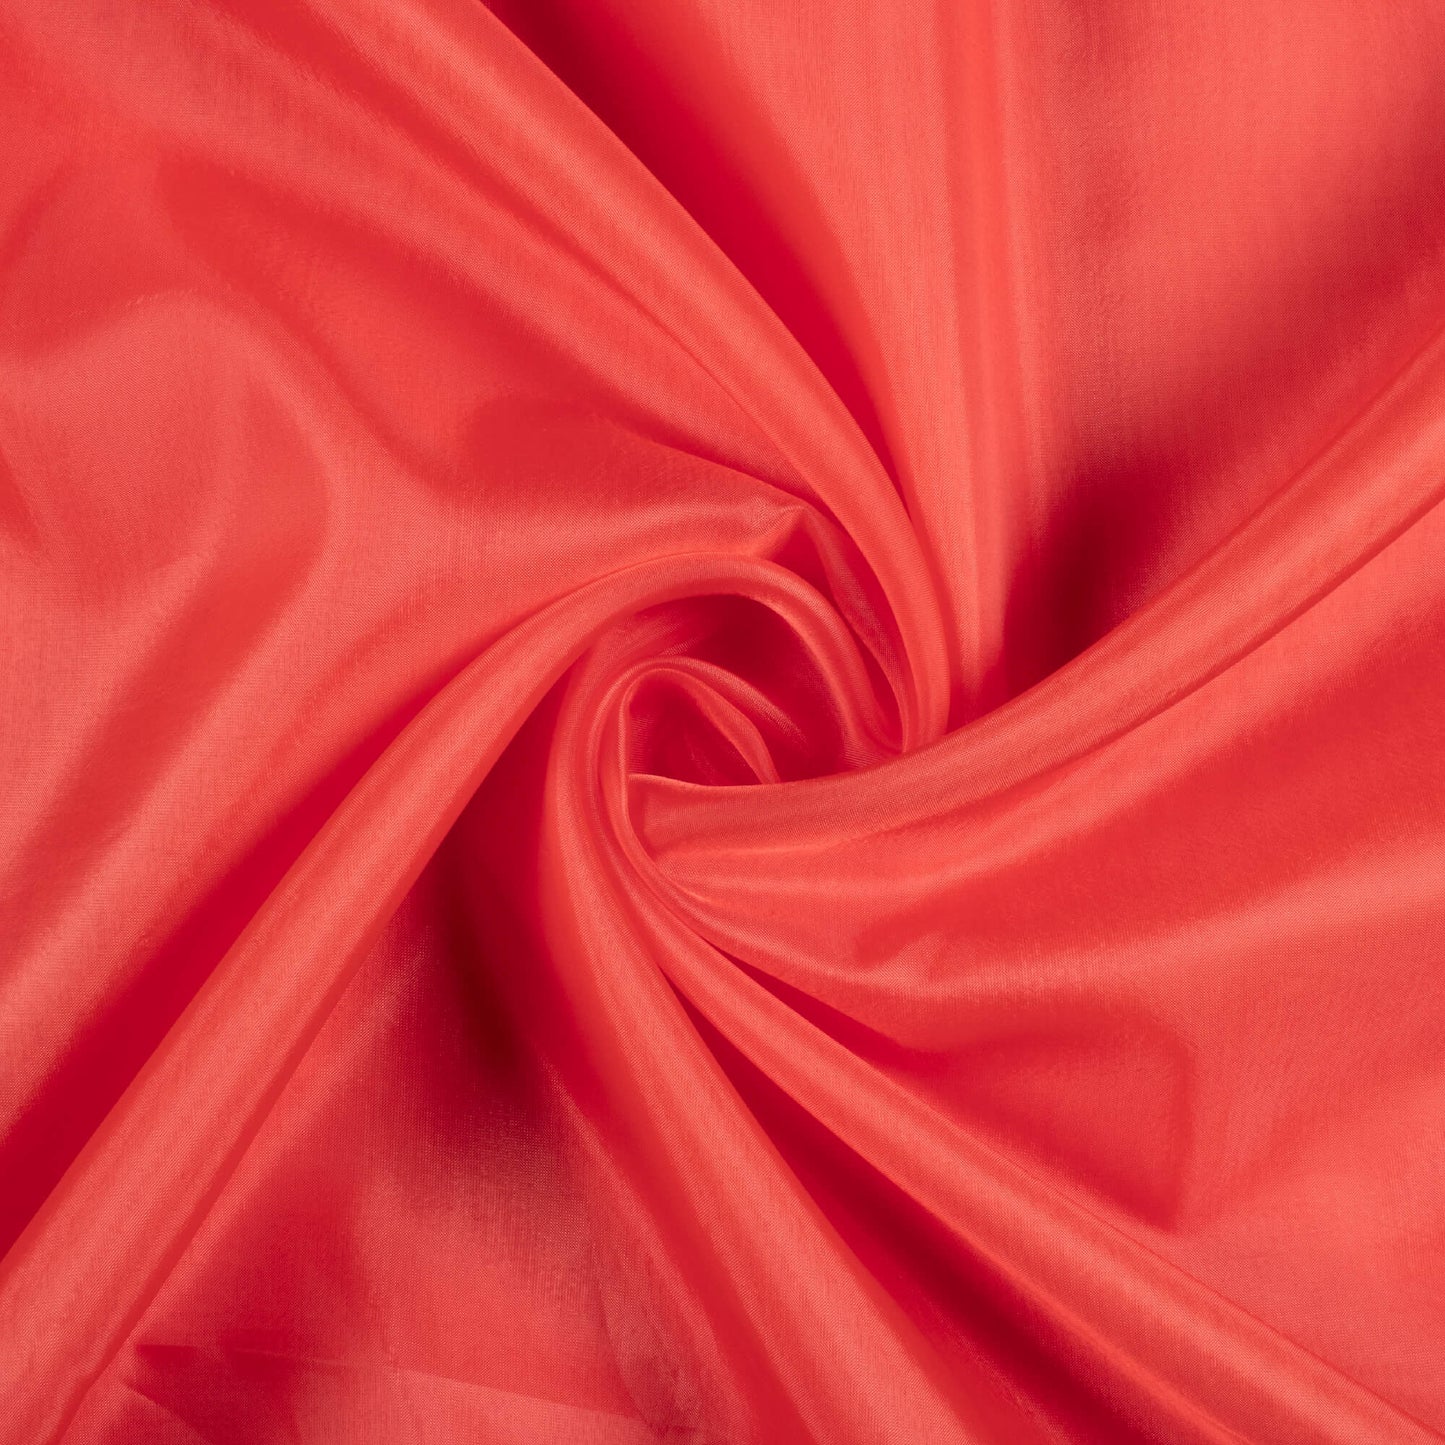 Burgundy Red Plain Premium Liquid Organza Fabric